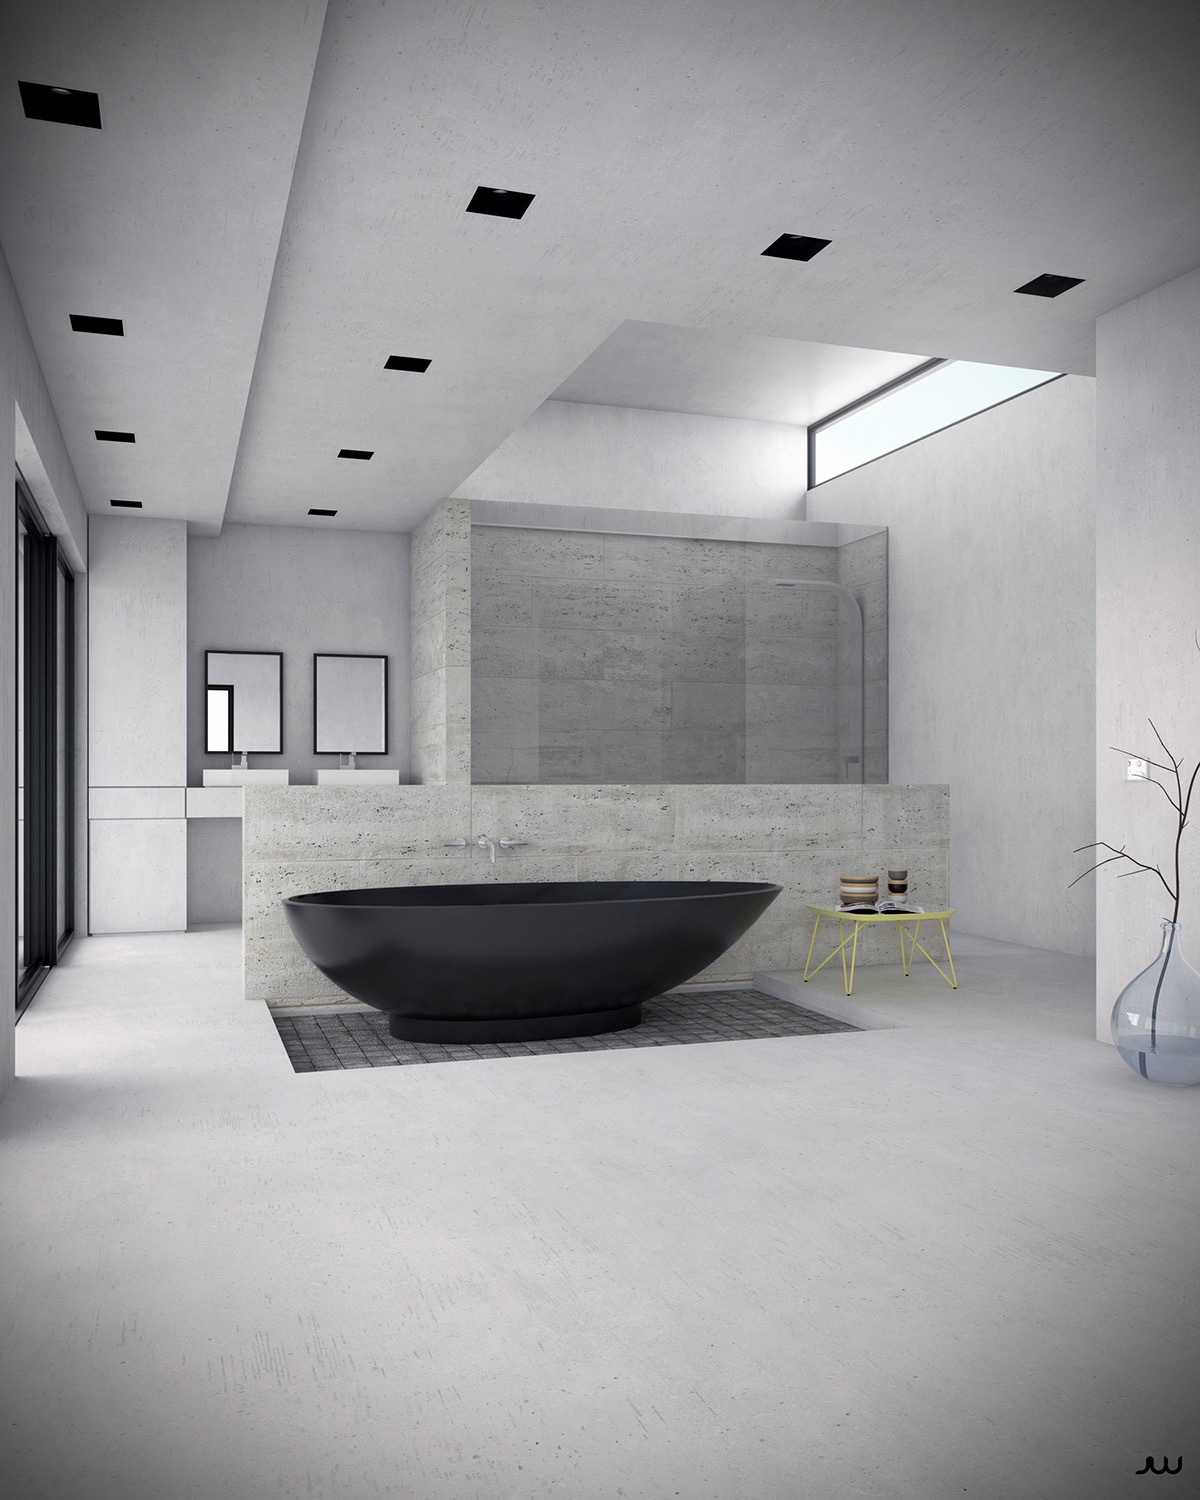 white modern bathroom design "width =" 1200 "height =" 1500 "srcset =" https://mileray.com/wp-content/uploads/2020/05/1588516016_516_Luxury-Bathroom-Designs-Complete-With-Modern-Bathtubs-Which-Presenting-The.jpg 1200w, https://mileray.com / wp-content / uploads / 2016/09 / Javier-Wainstein-240x300.jpg 240w, https://mileray.com/wp-content/uploads/2016/09/Javier-Wainstein-768x960.jpg 768w, https: / / mileray.com/wp-content/uploads/2016/09/Javier-Wainstein-819x1024.jpg 819w, https://mileray.com/wp-content/uploads/2016/09/Javier-Wainstein-696x870.jpg 696w, https://mileray.com/wp-content/uploads/2016/09/Javier-Wainstein-1068x1335.jpg 1068w, https://mileray.com/wp-content/uploads/2016/09/Javier-Wainstein- 336x420 .jpg 336w "sizes =" (maximum width: 1200px) 100vw, 1200px